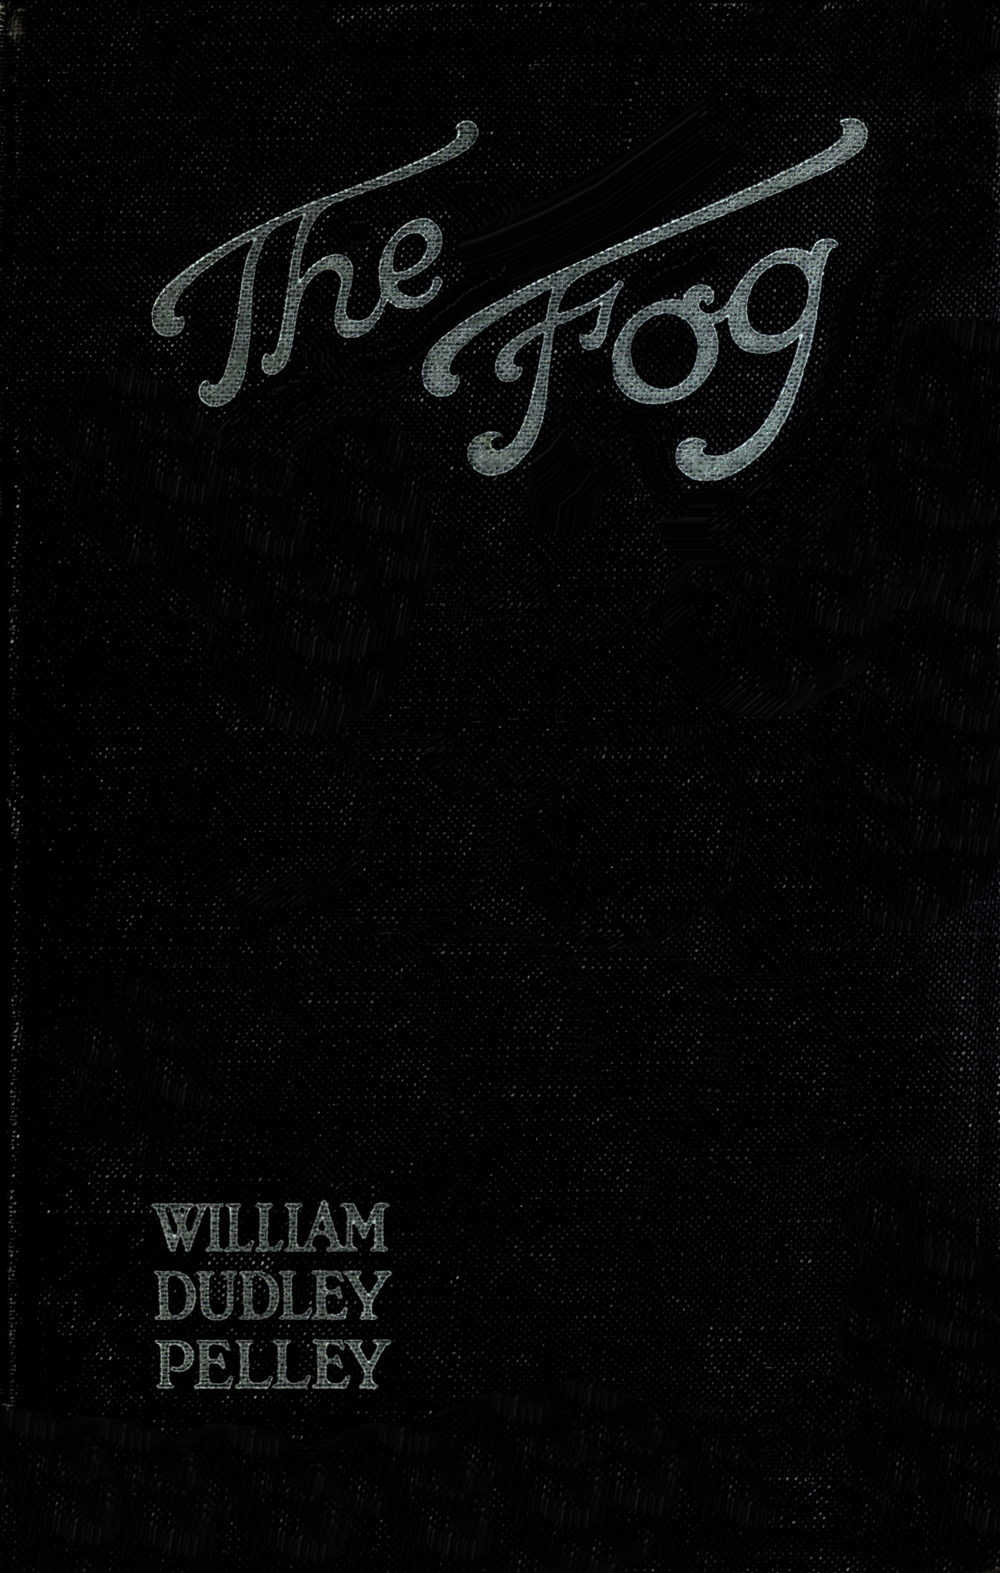 The Fog, by William Dudley Pelleyâ€”A Project Gutenberg eBook